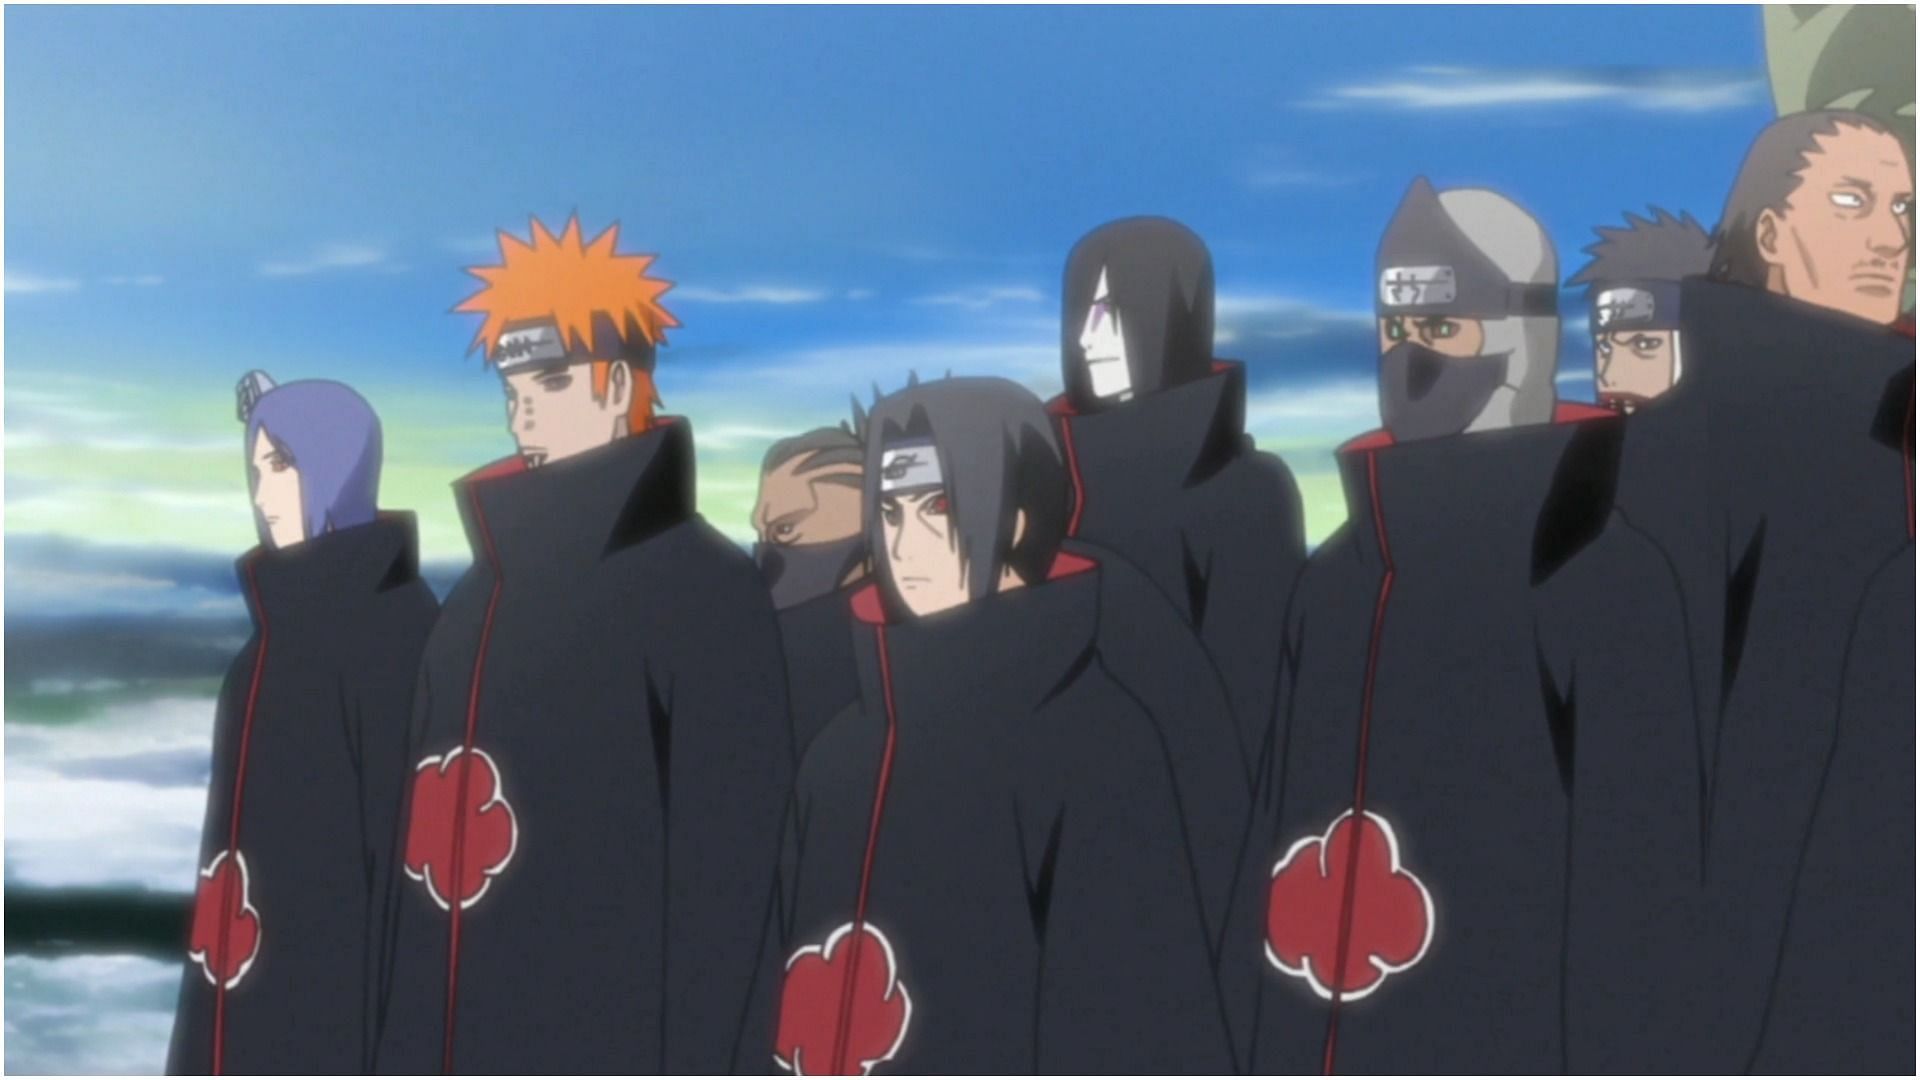 Akatsuki members as seen in Naruto (Image via Studio Pierrot)